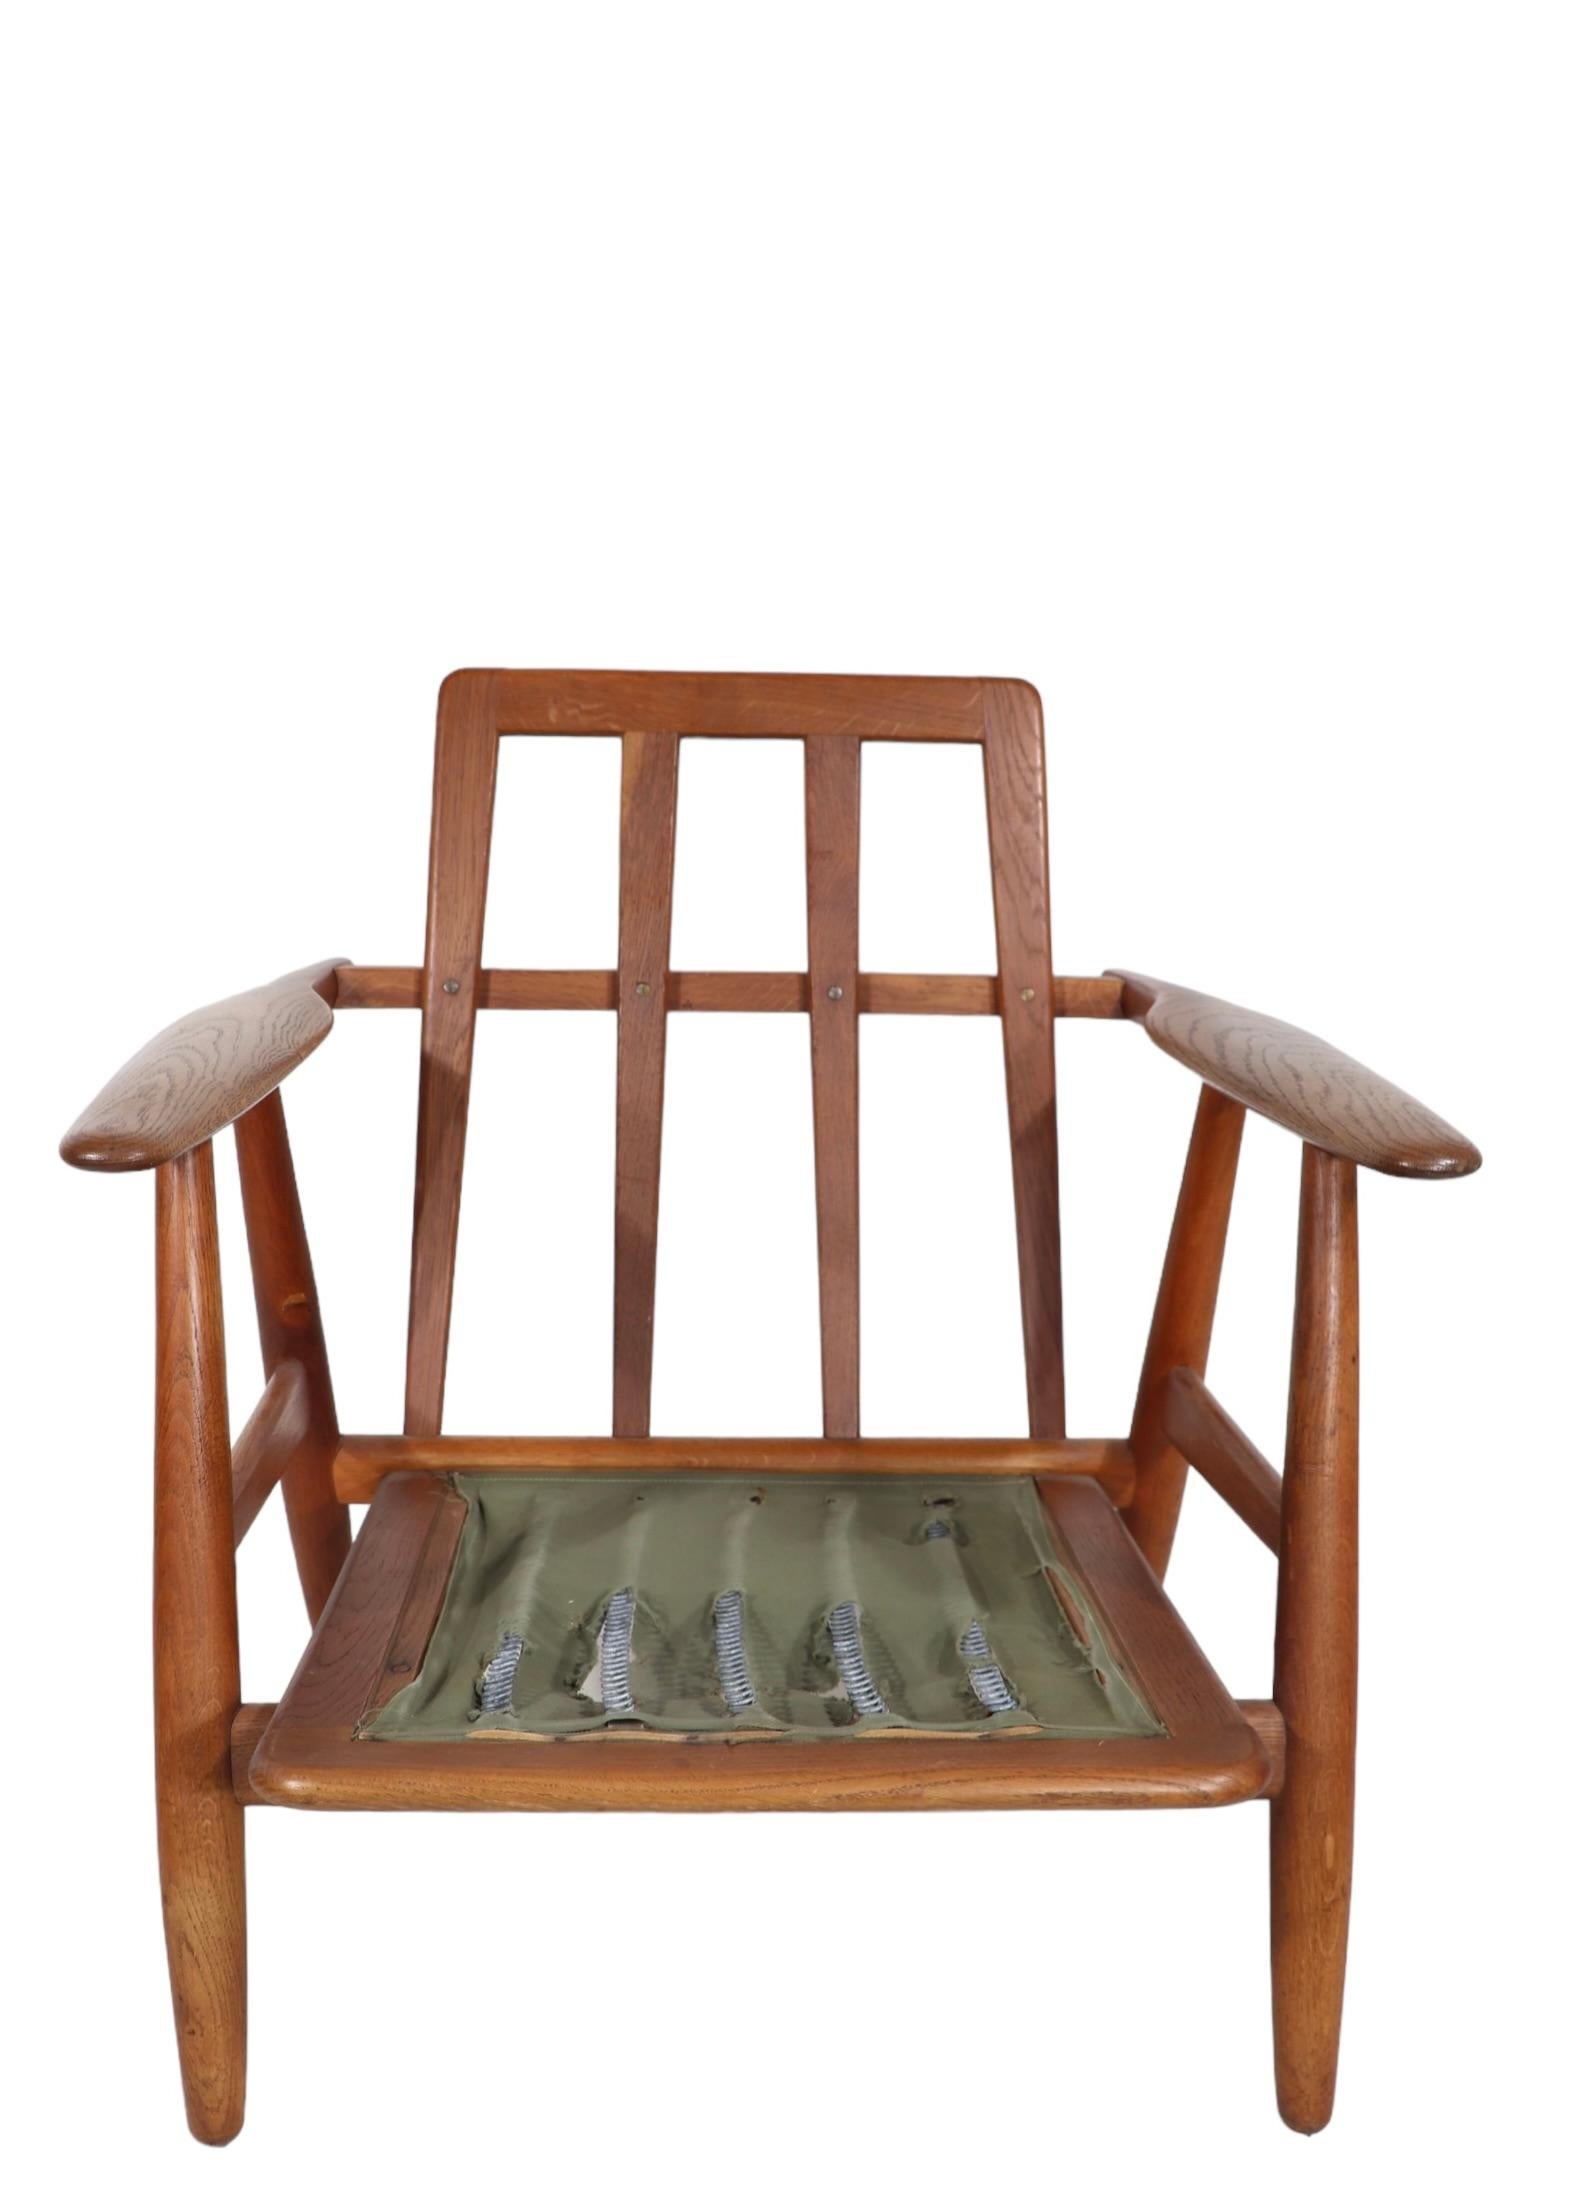 Original Hans Wegner Cigar Chair Made in Denmark for GETAMA c 1950's For Sale 12